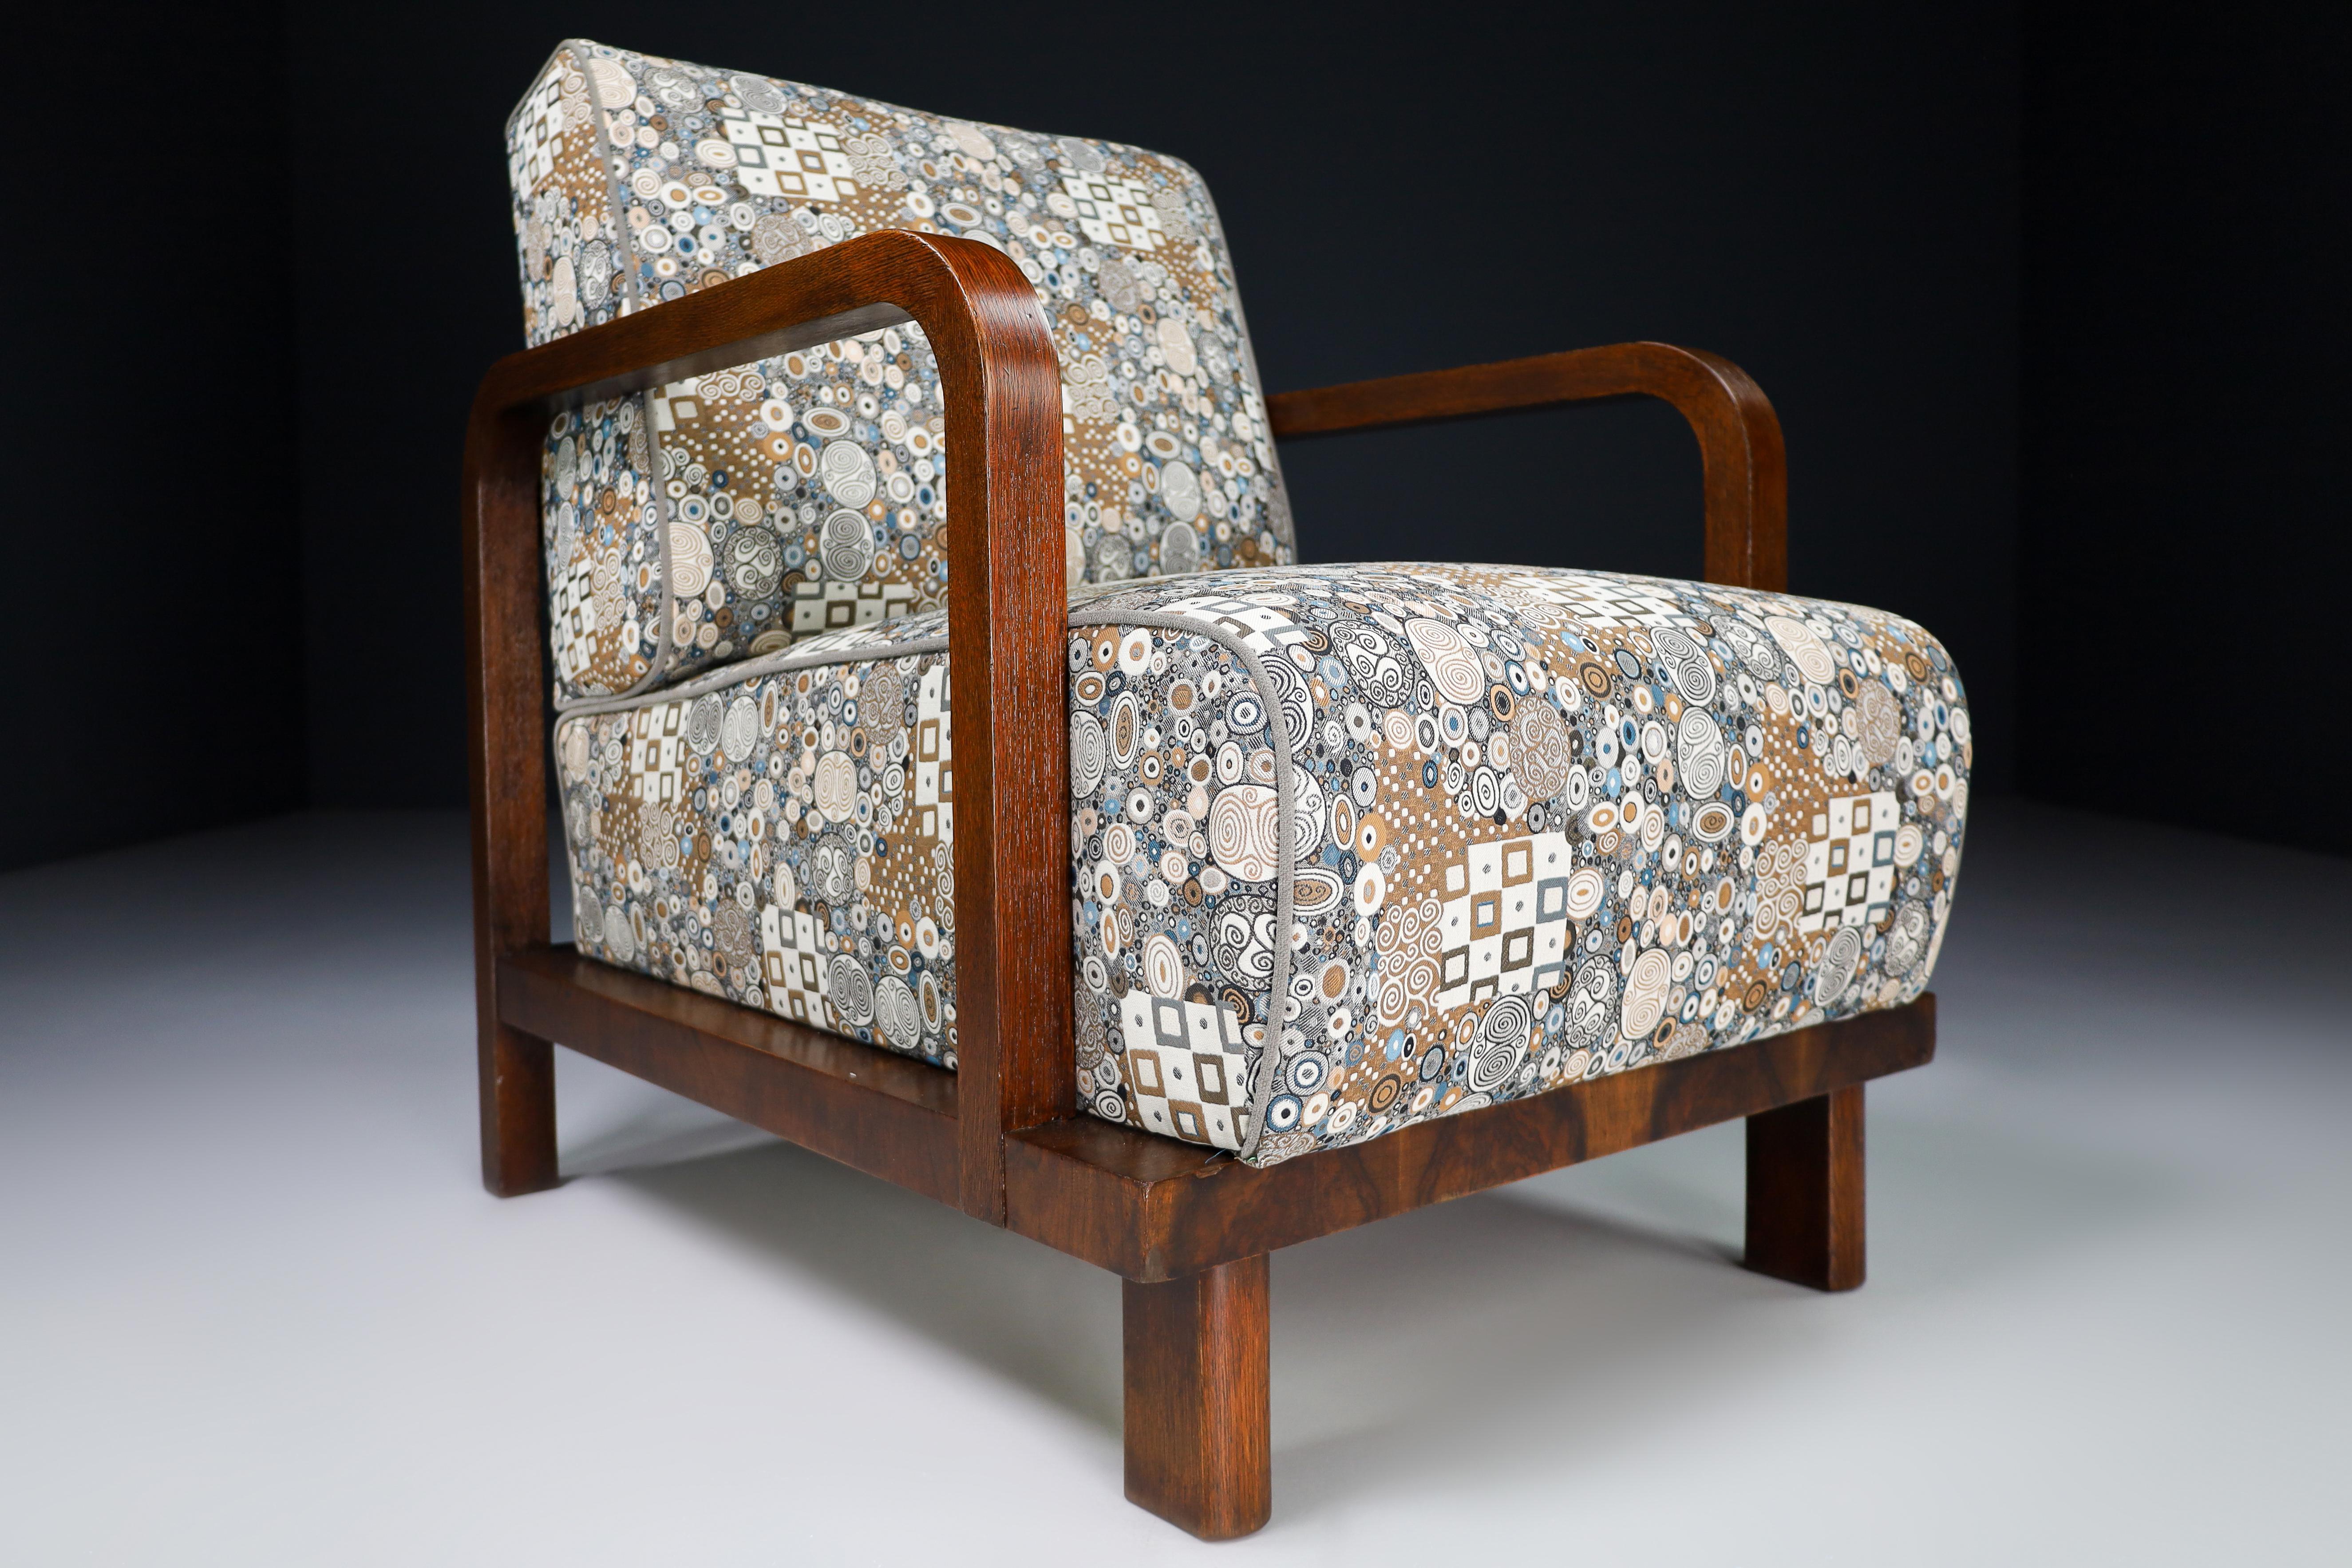 1930s armchair styles